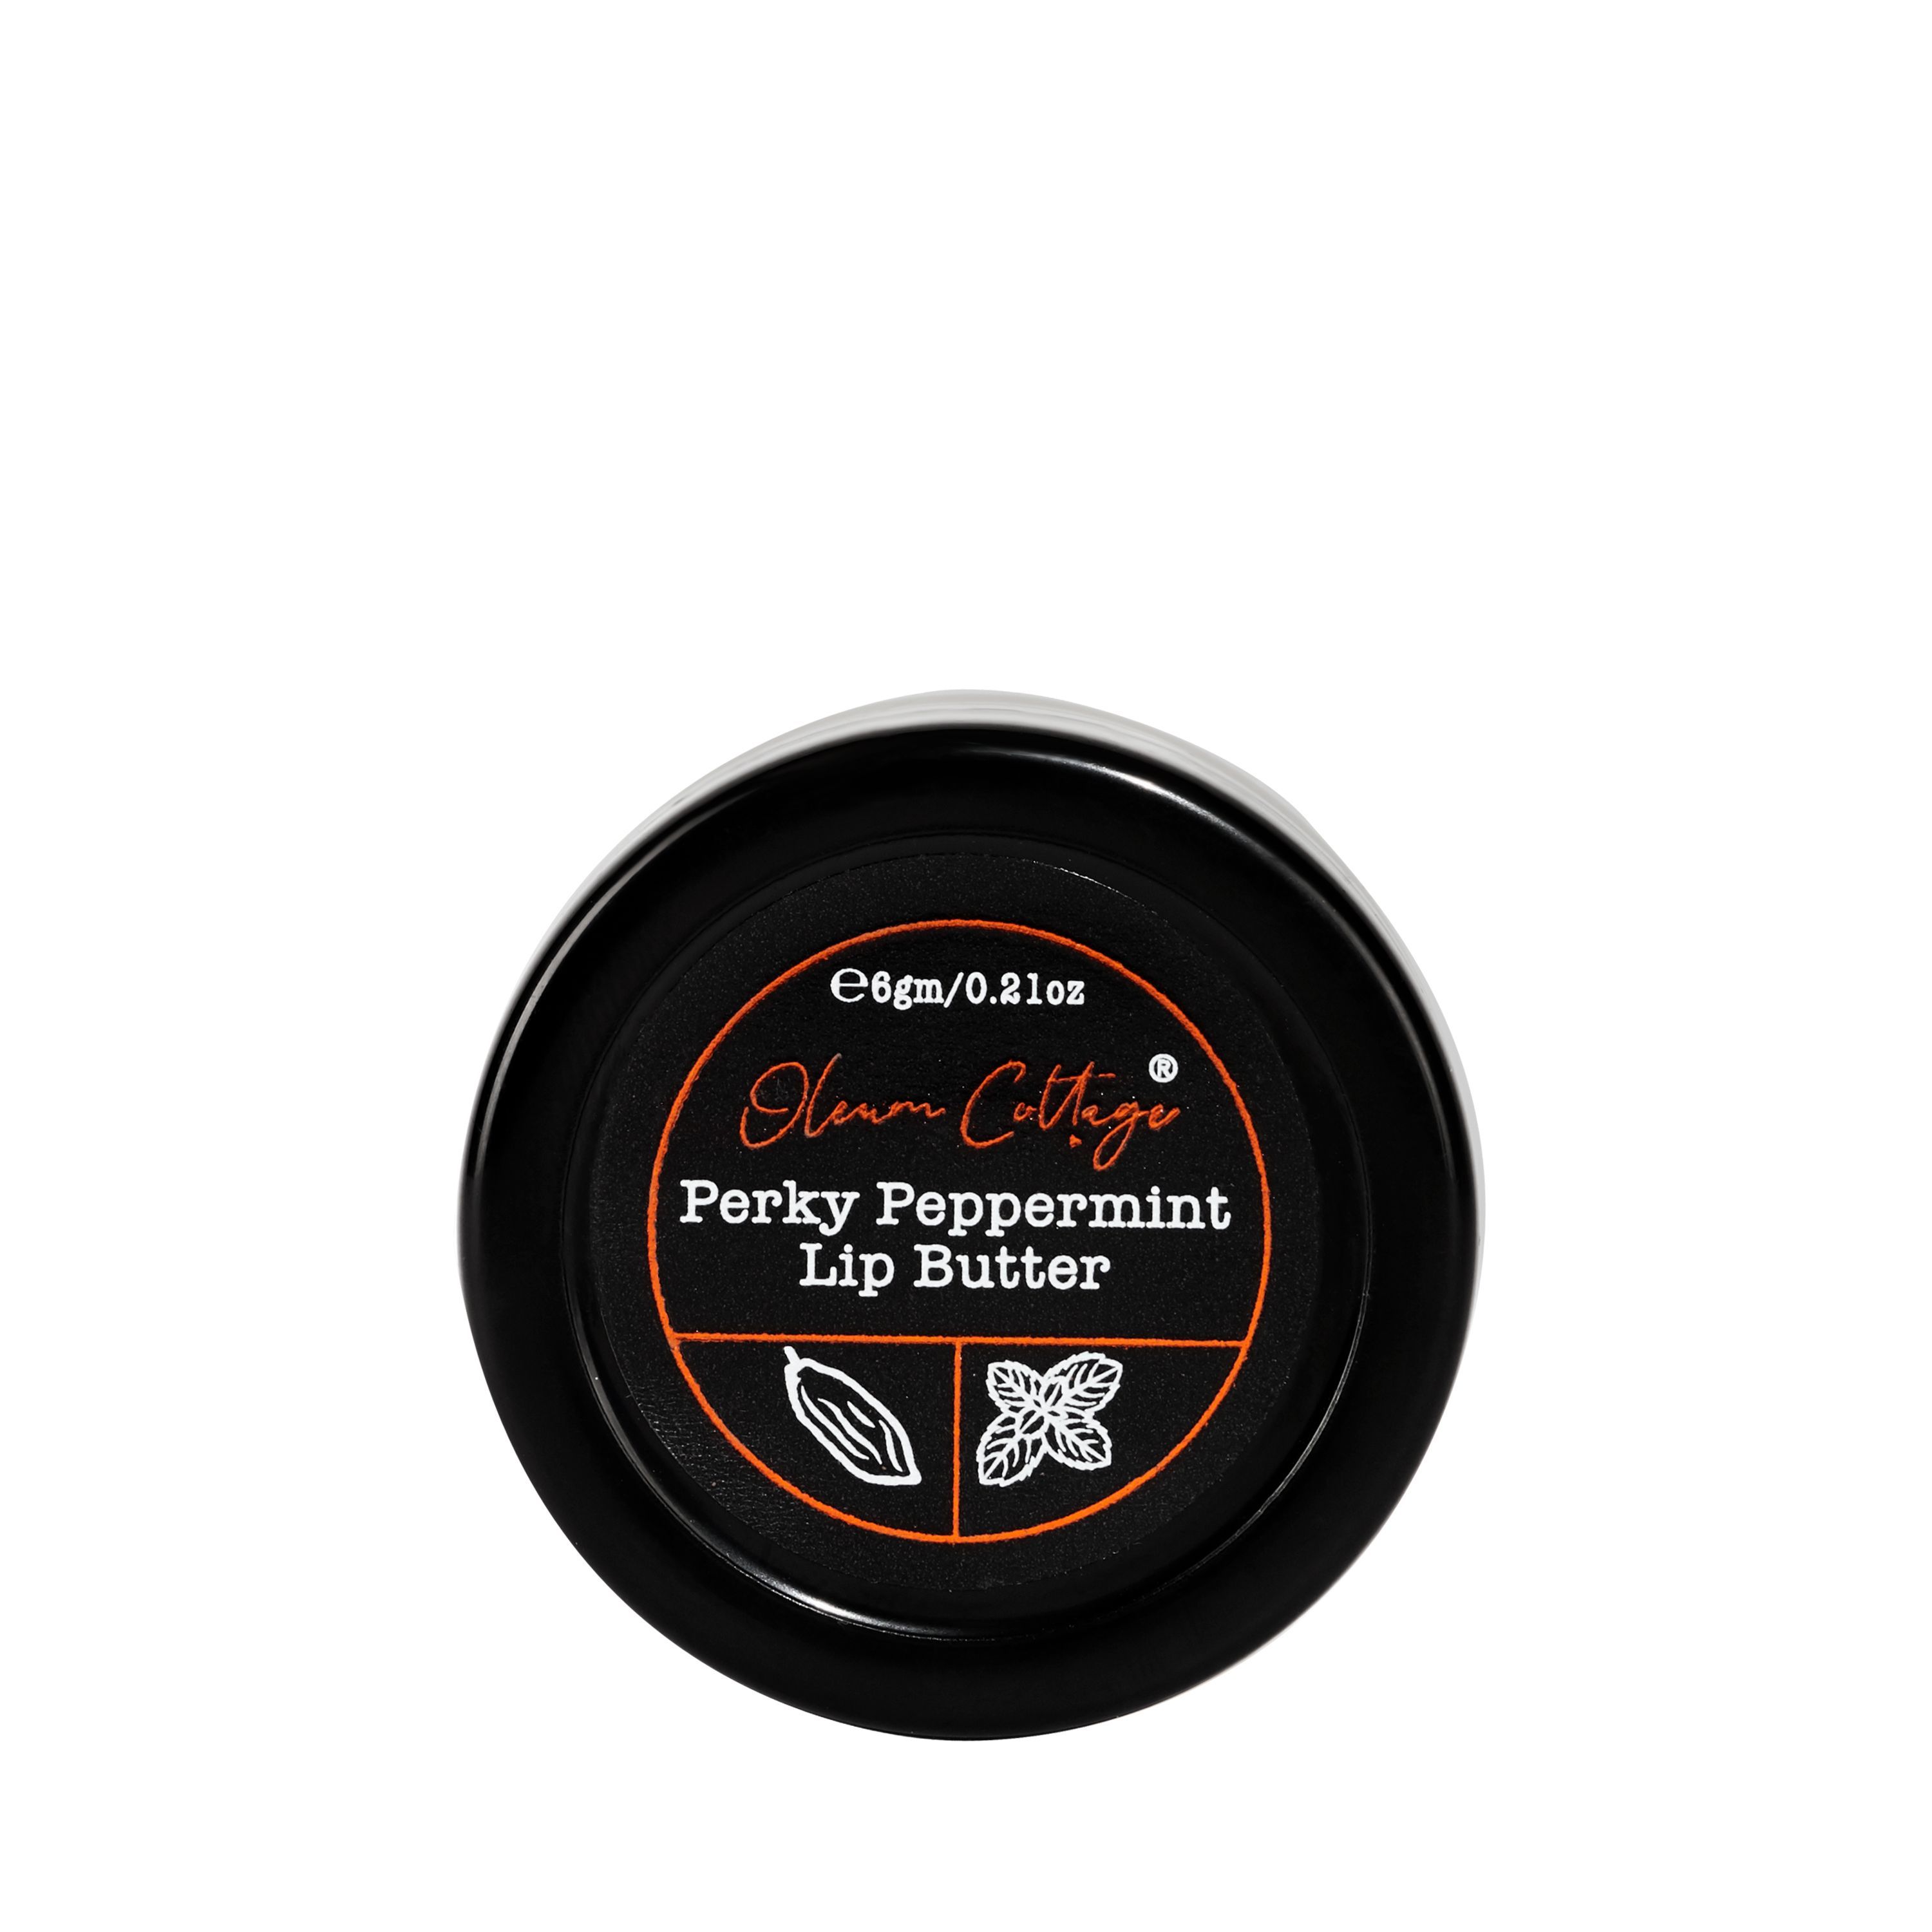 Oleum Cottage Perky Peppermint Lip Butter